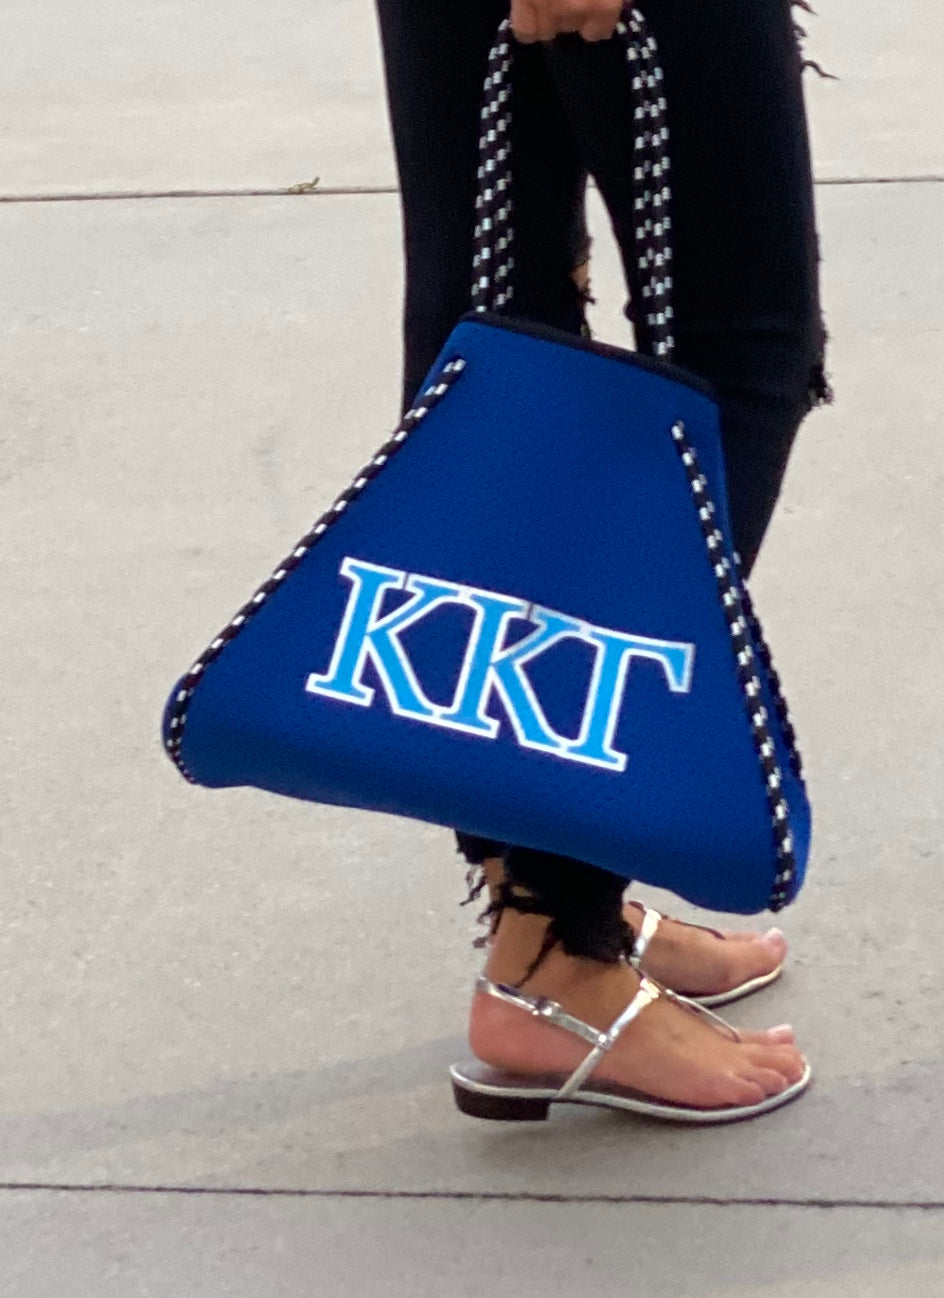 Kappa Kappa Gamma Sorority Gift Bid Day Recruitment Neoprene Tote Bags School Overnight Gym Travel Beach Sister Dallas Hill